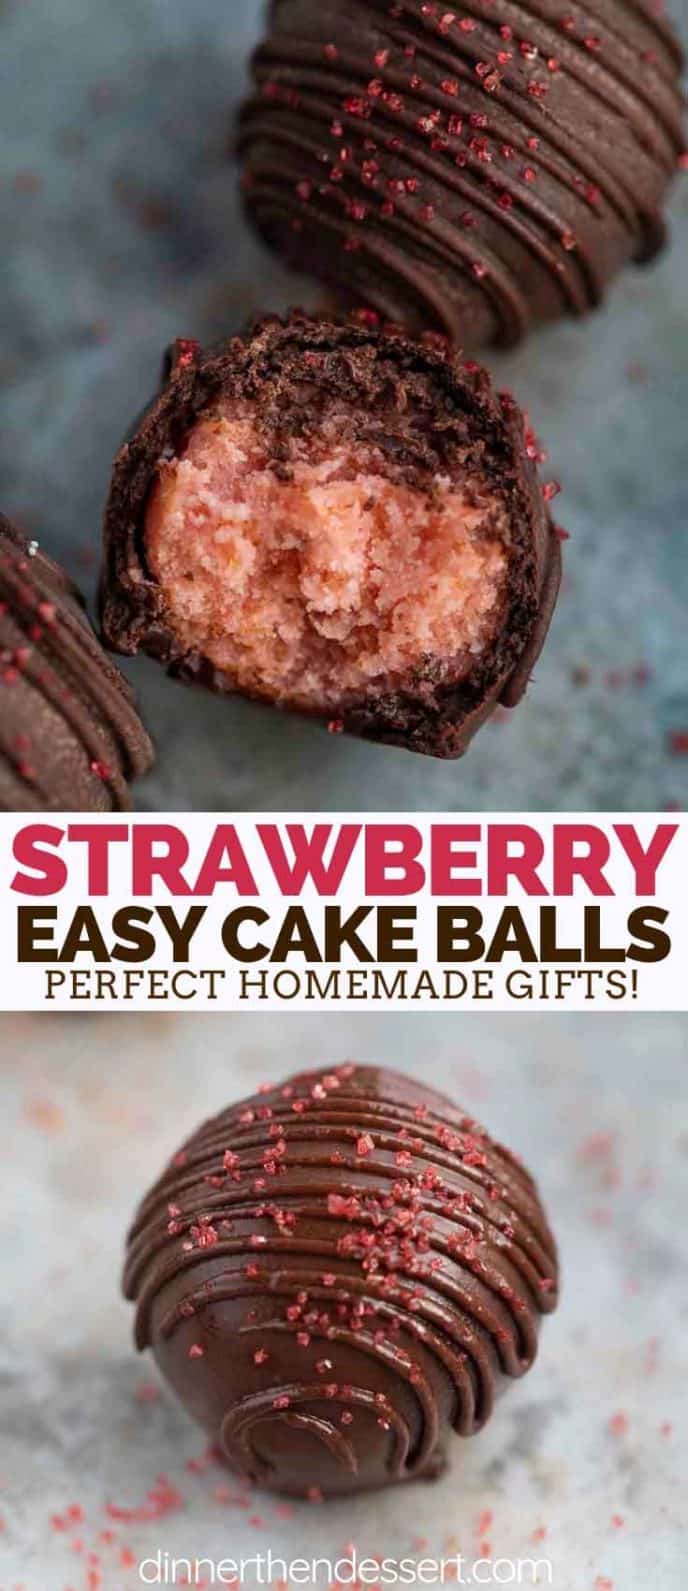 Chocolate Dipped Strawberry Cake Balls